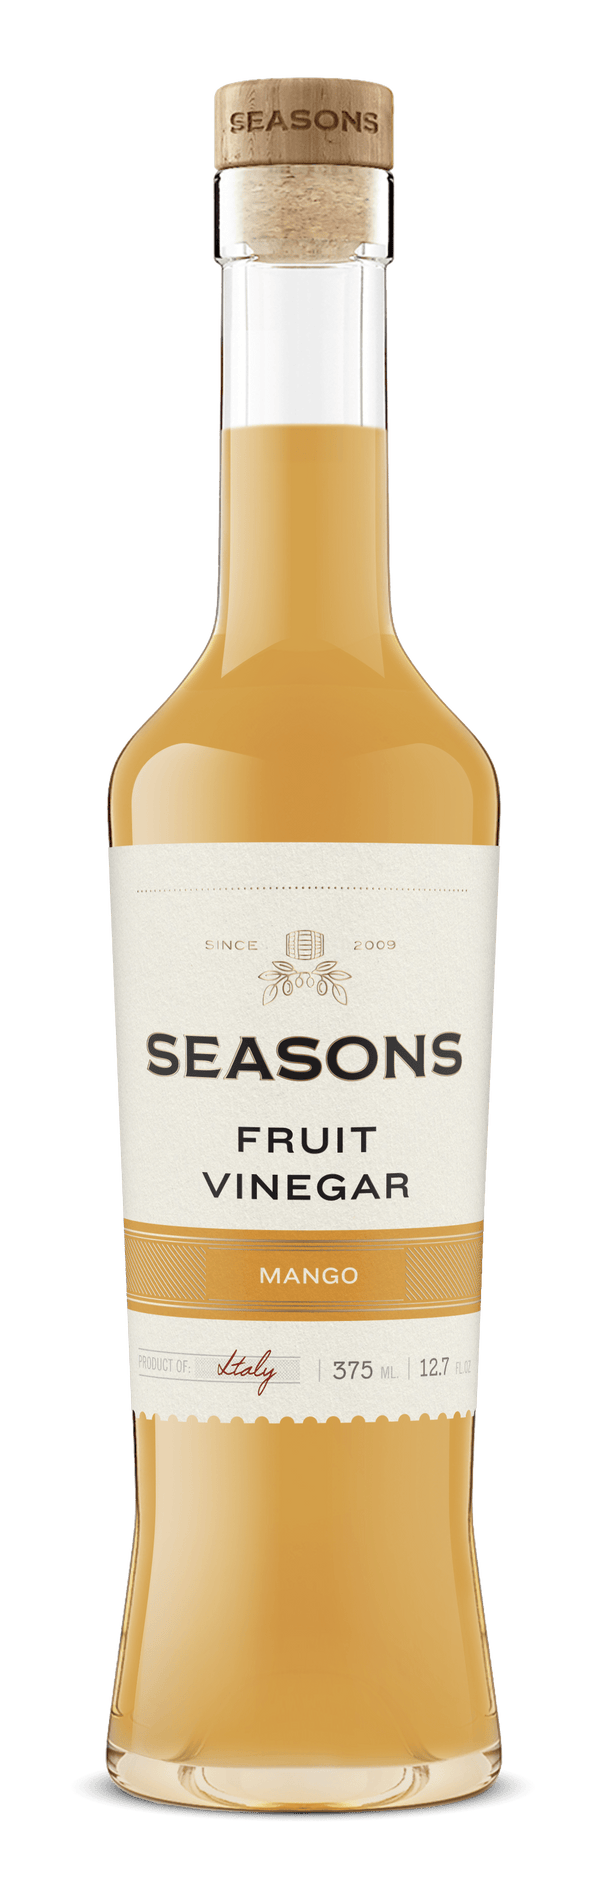 Seasons Fruit Vinegar 375mL Mango